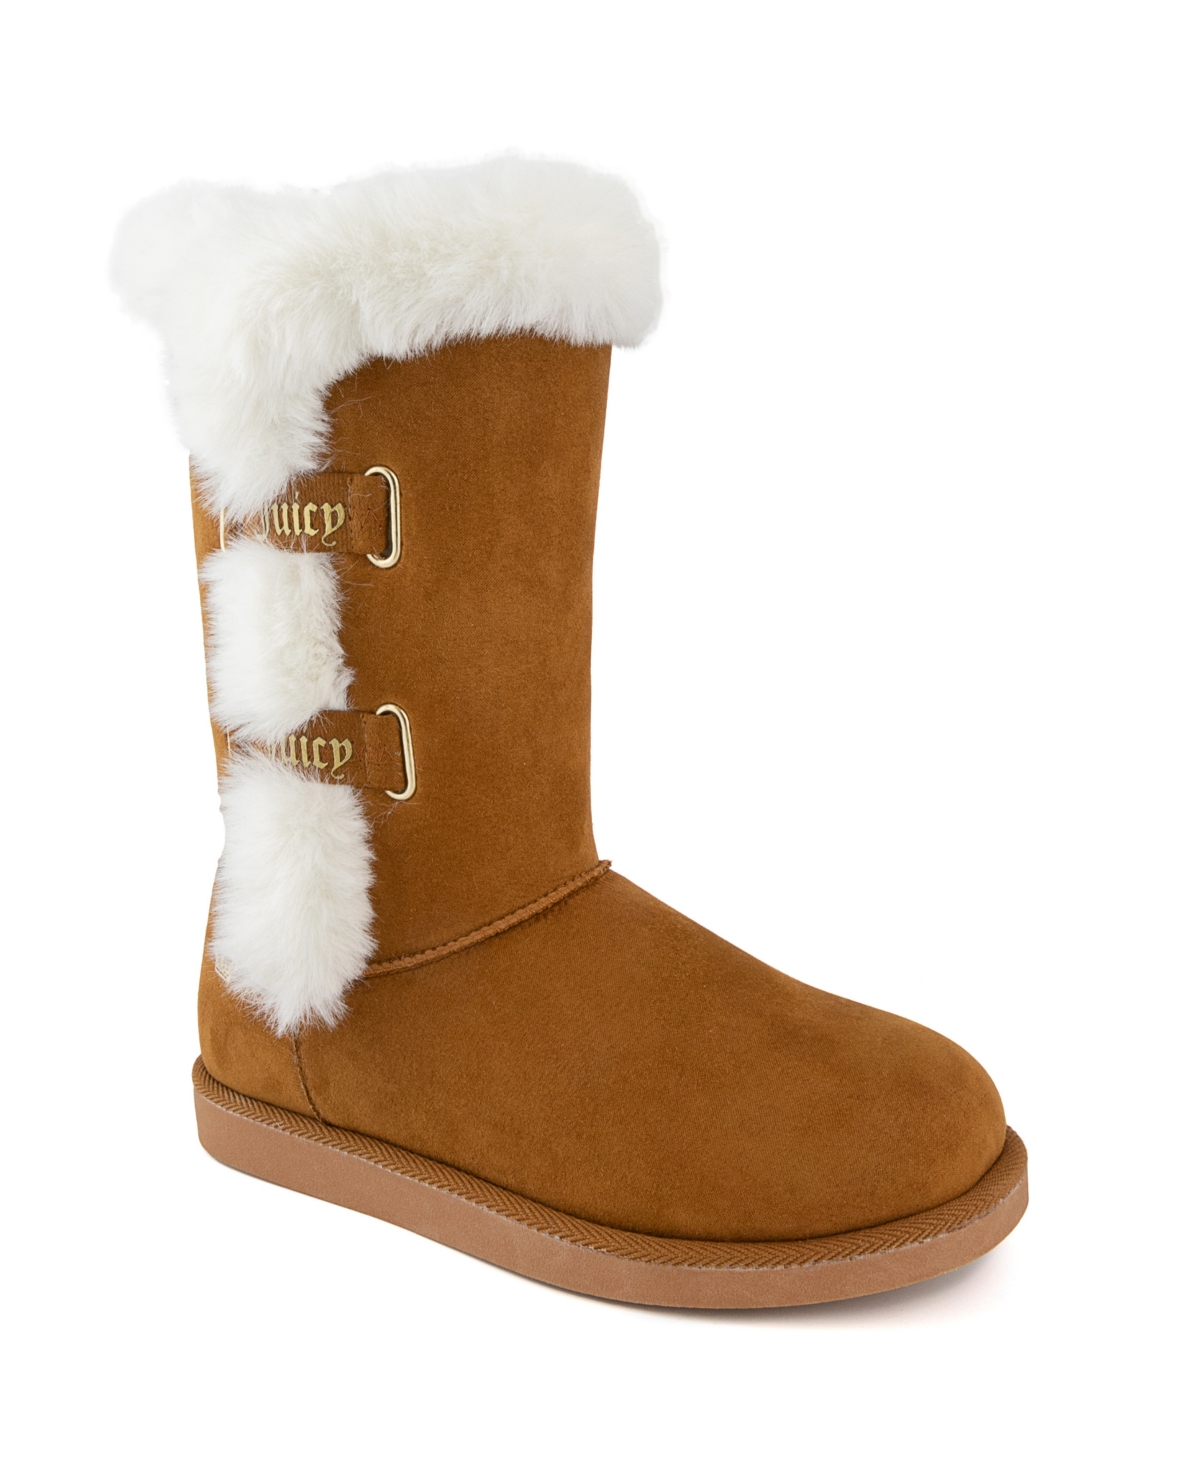 Women's Koded Faux Fur Winter Boots - Cognac Micro